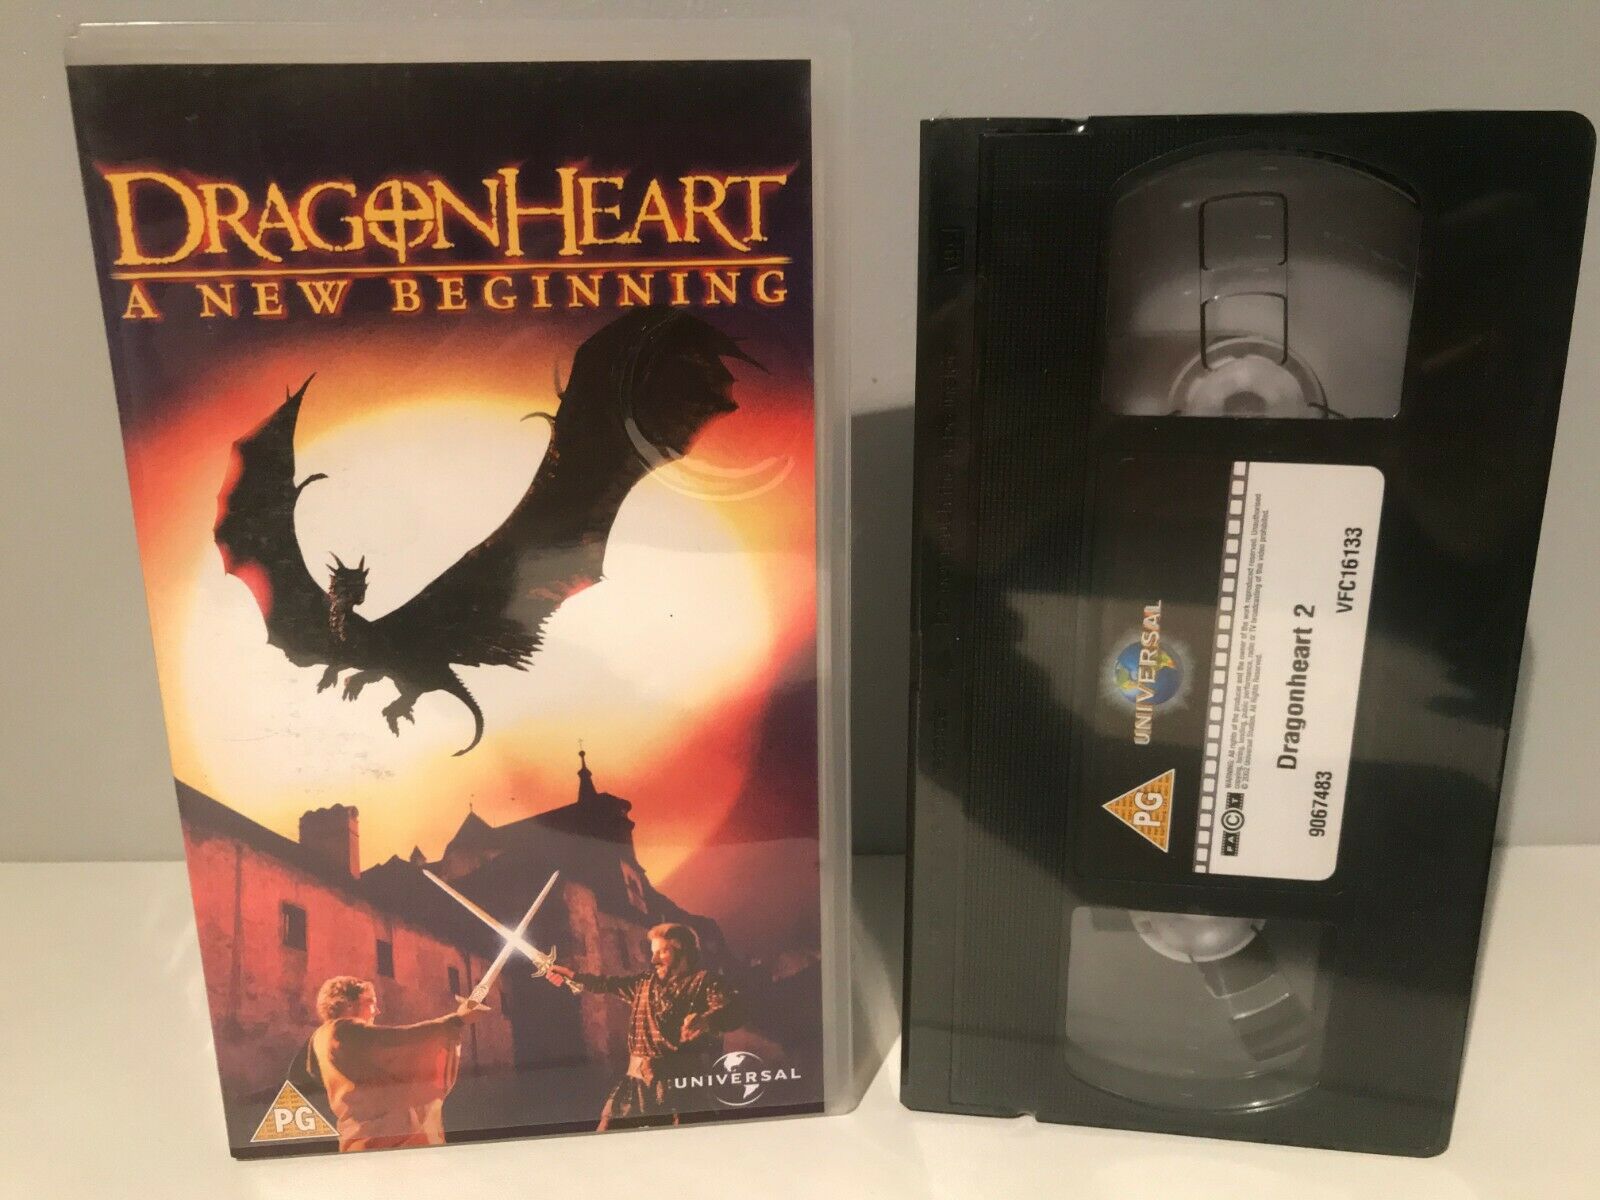 Dragonheart: A New Beginning: Fantasy Adventure - Christopher Masterson - VHS-